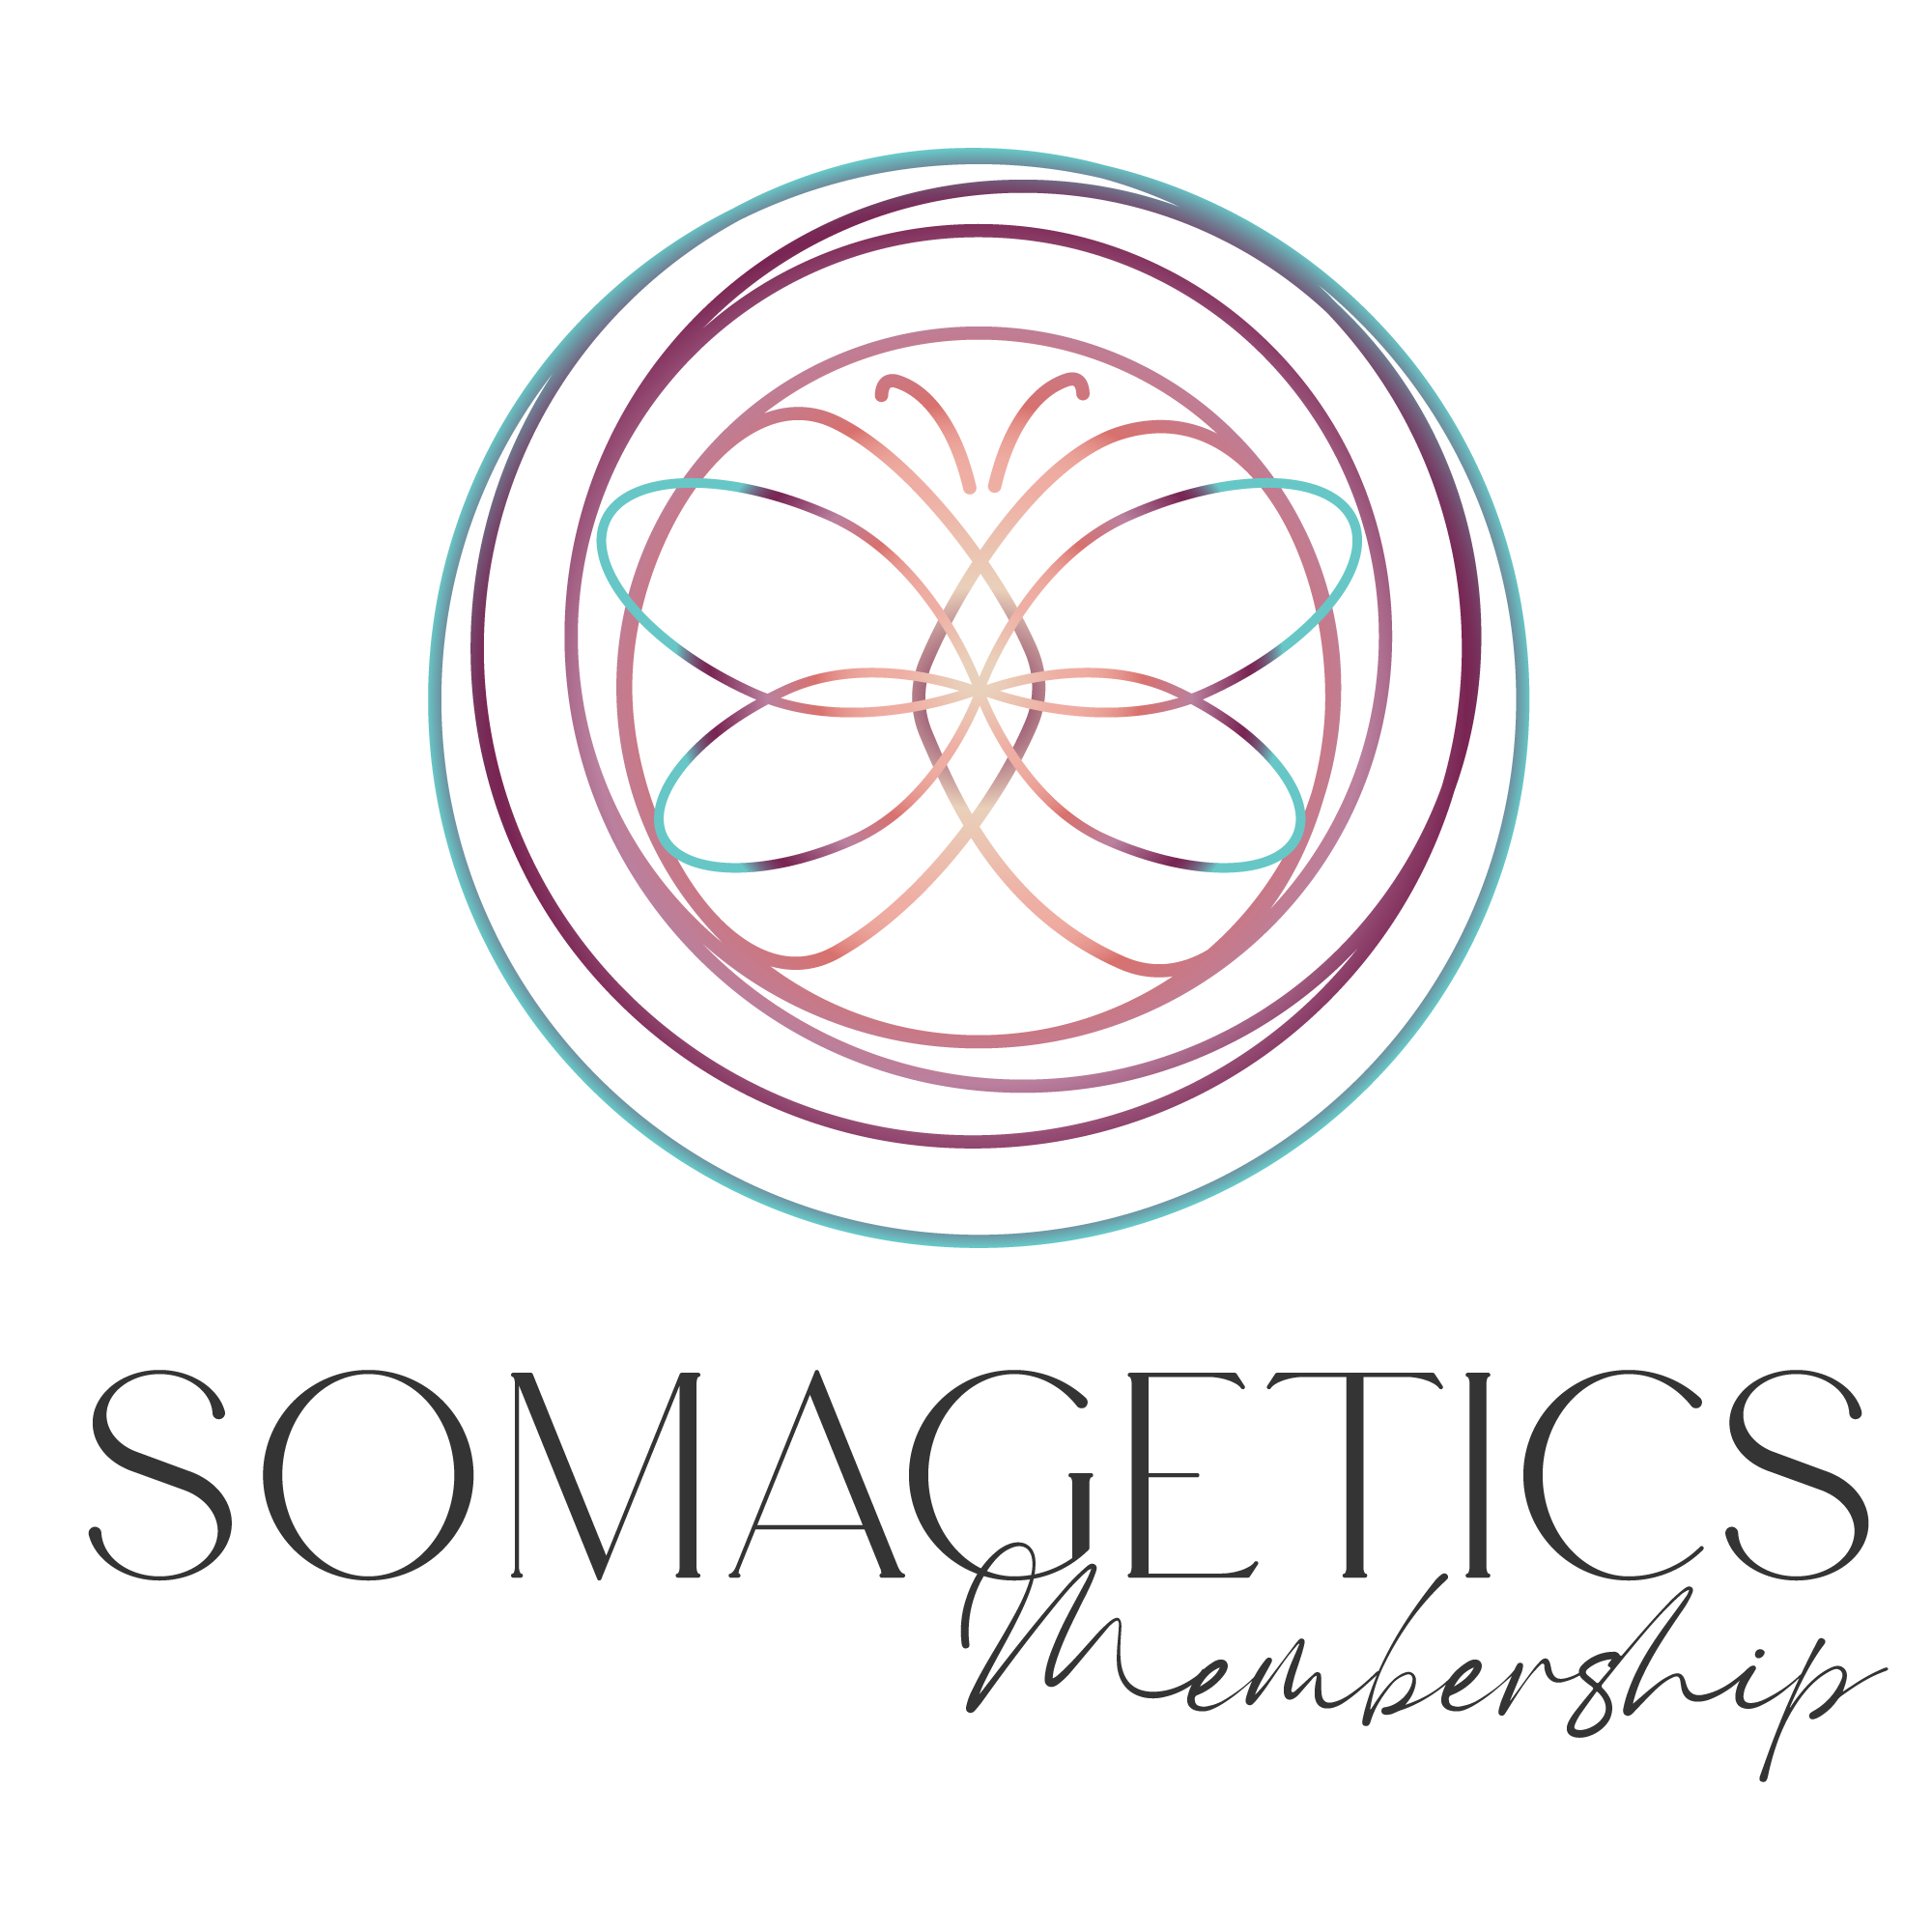 coach website design branding: membership icon for somagetics, embodied trauma coach training